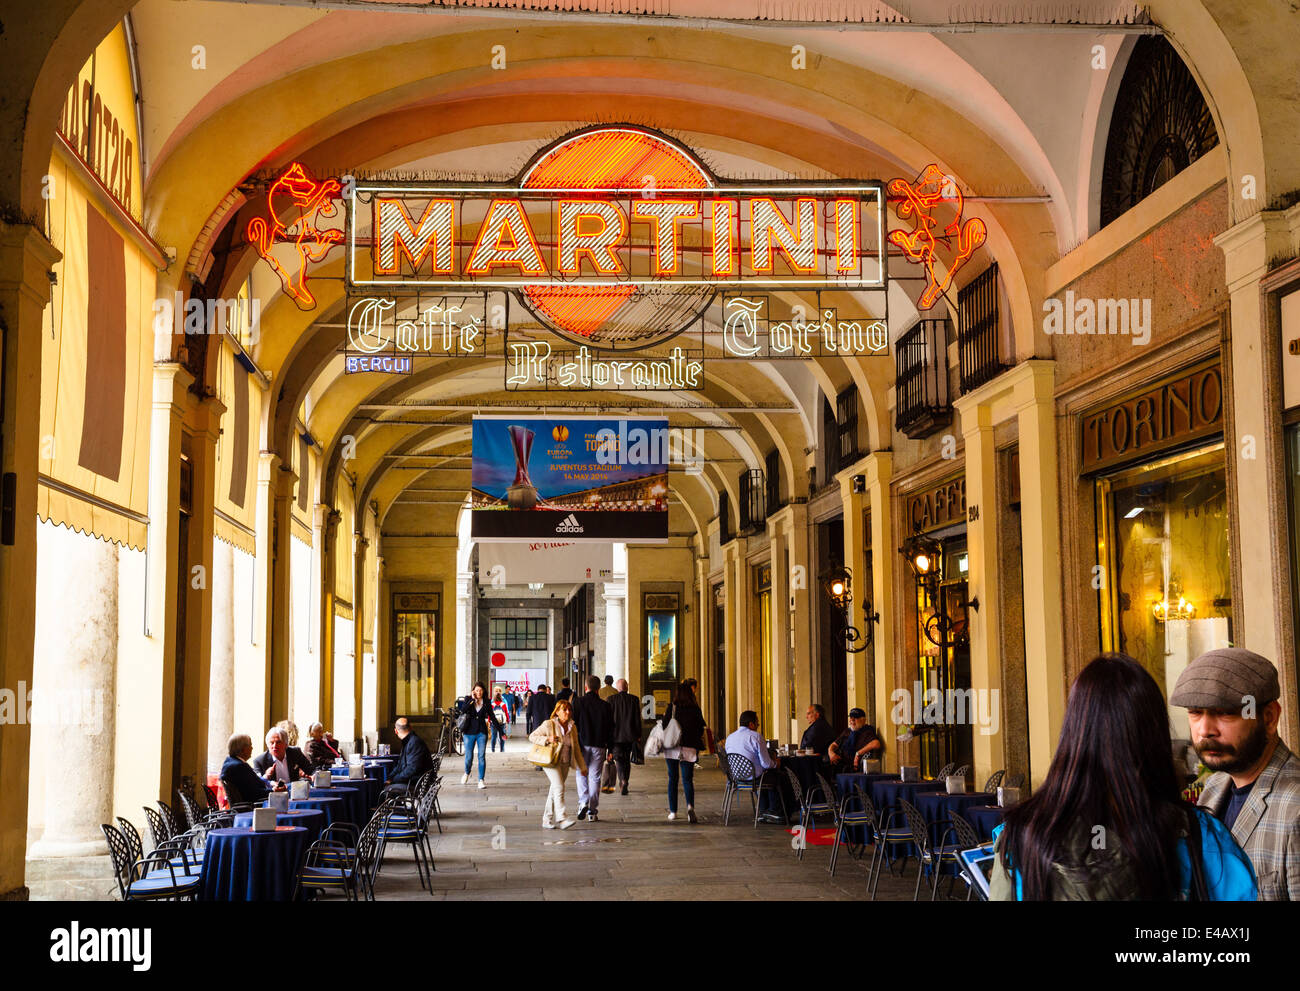 Caffe Torino, Piazza San Carlo, Turin, Italien. Stockfoto